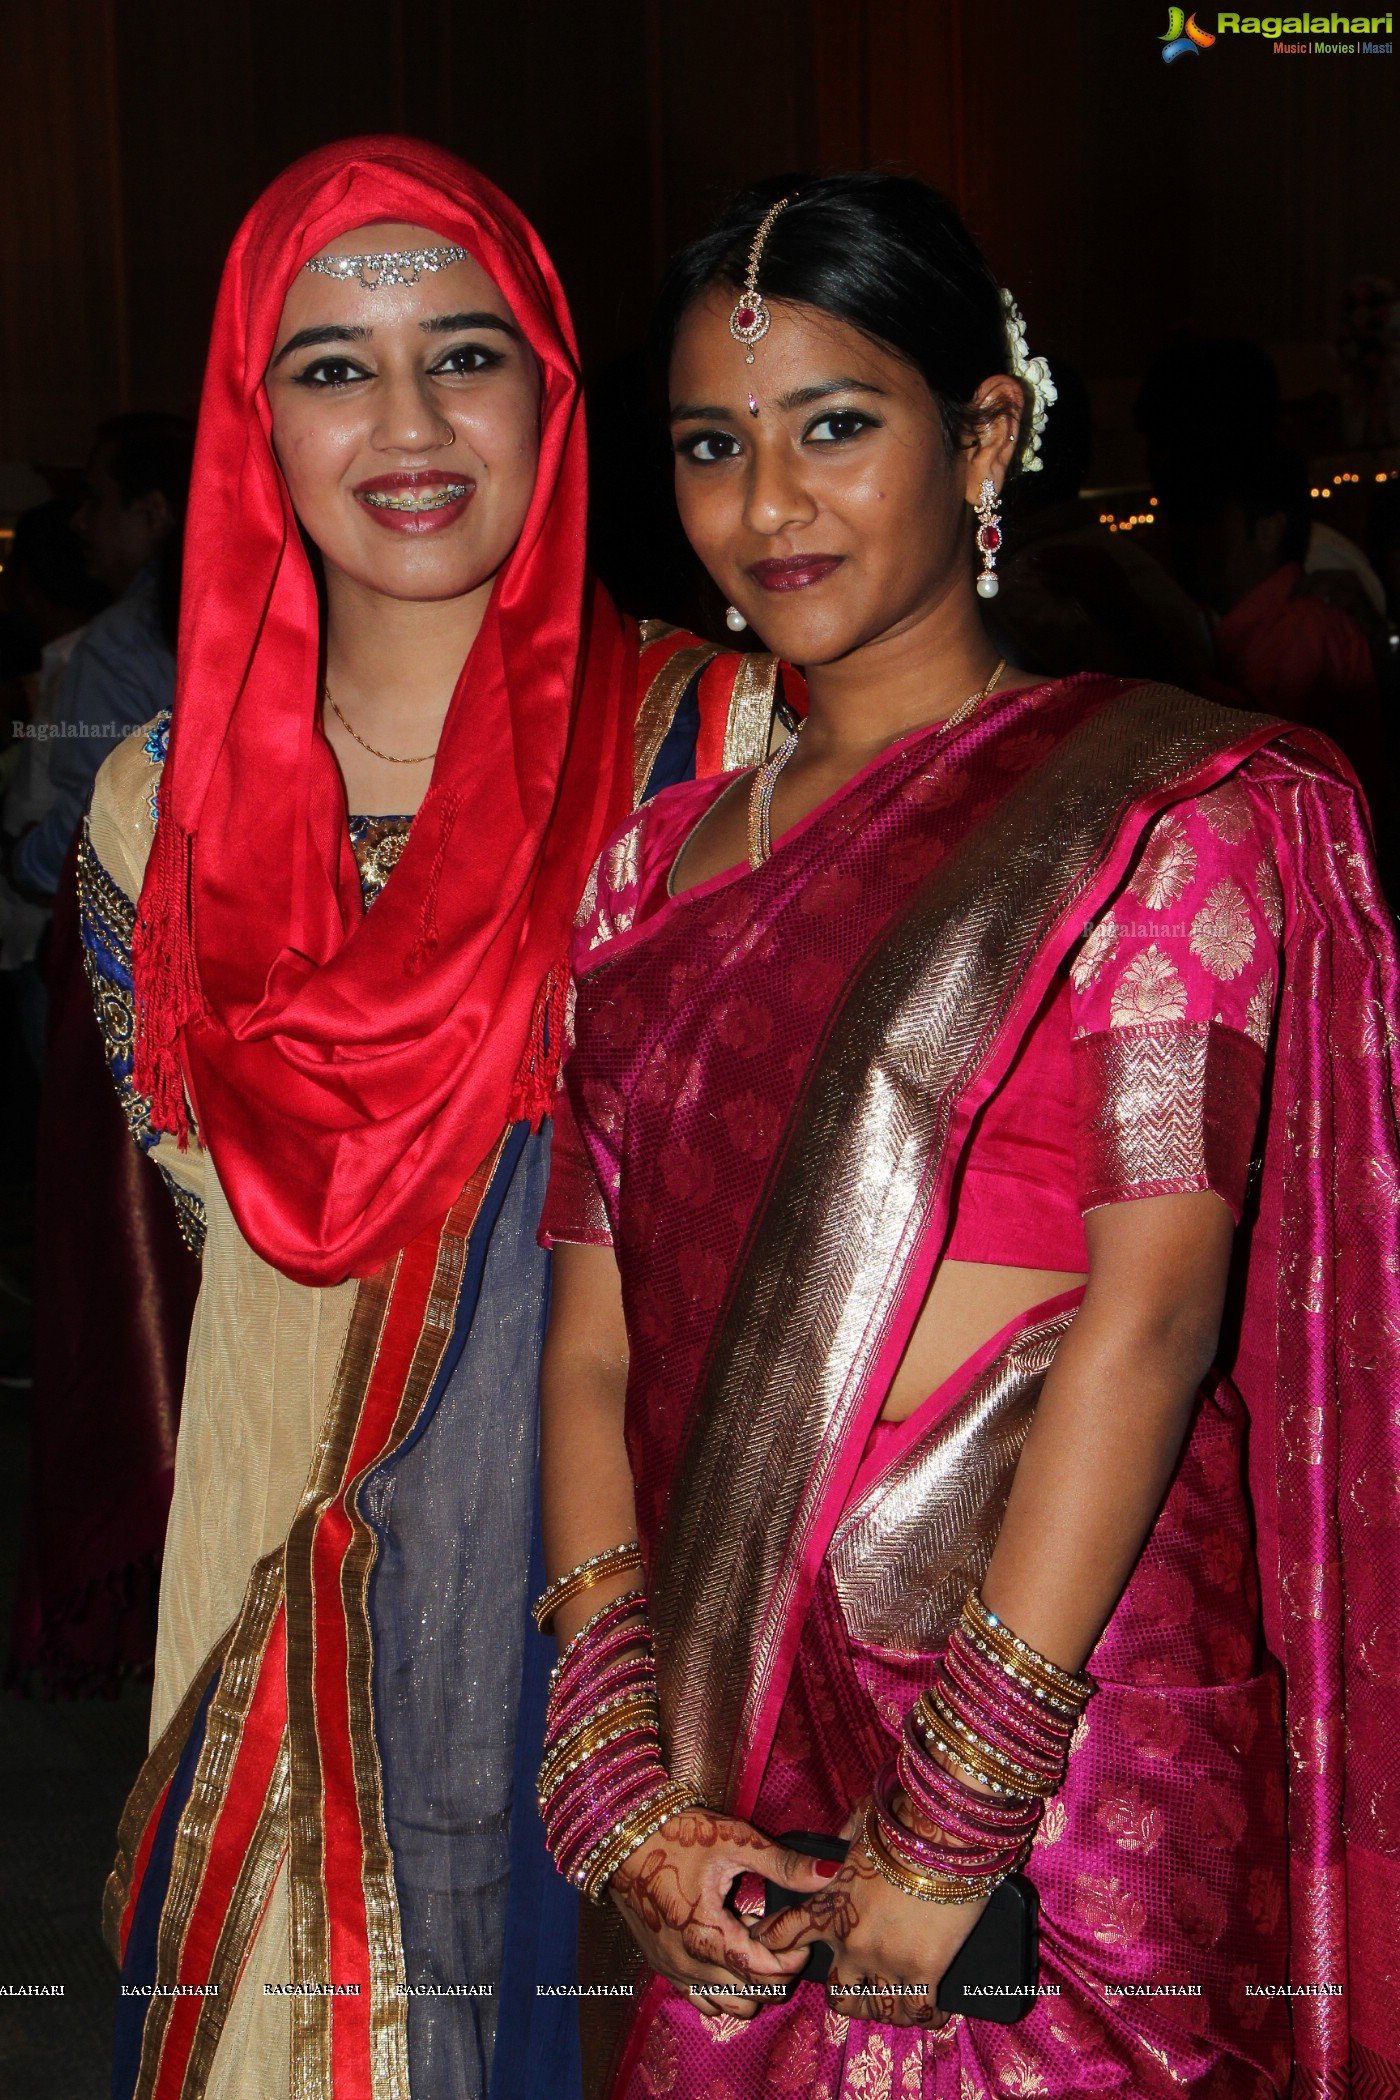 Grand Wedding of Dr. Supreeth Reddy-Dr. Shalini Reddy at HICC, Novotel, Hyderabad